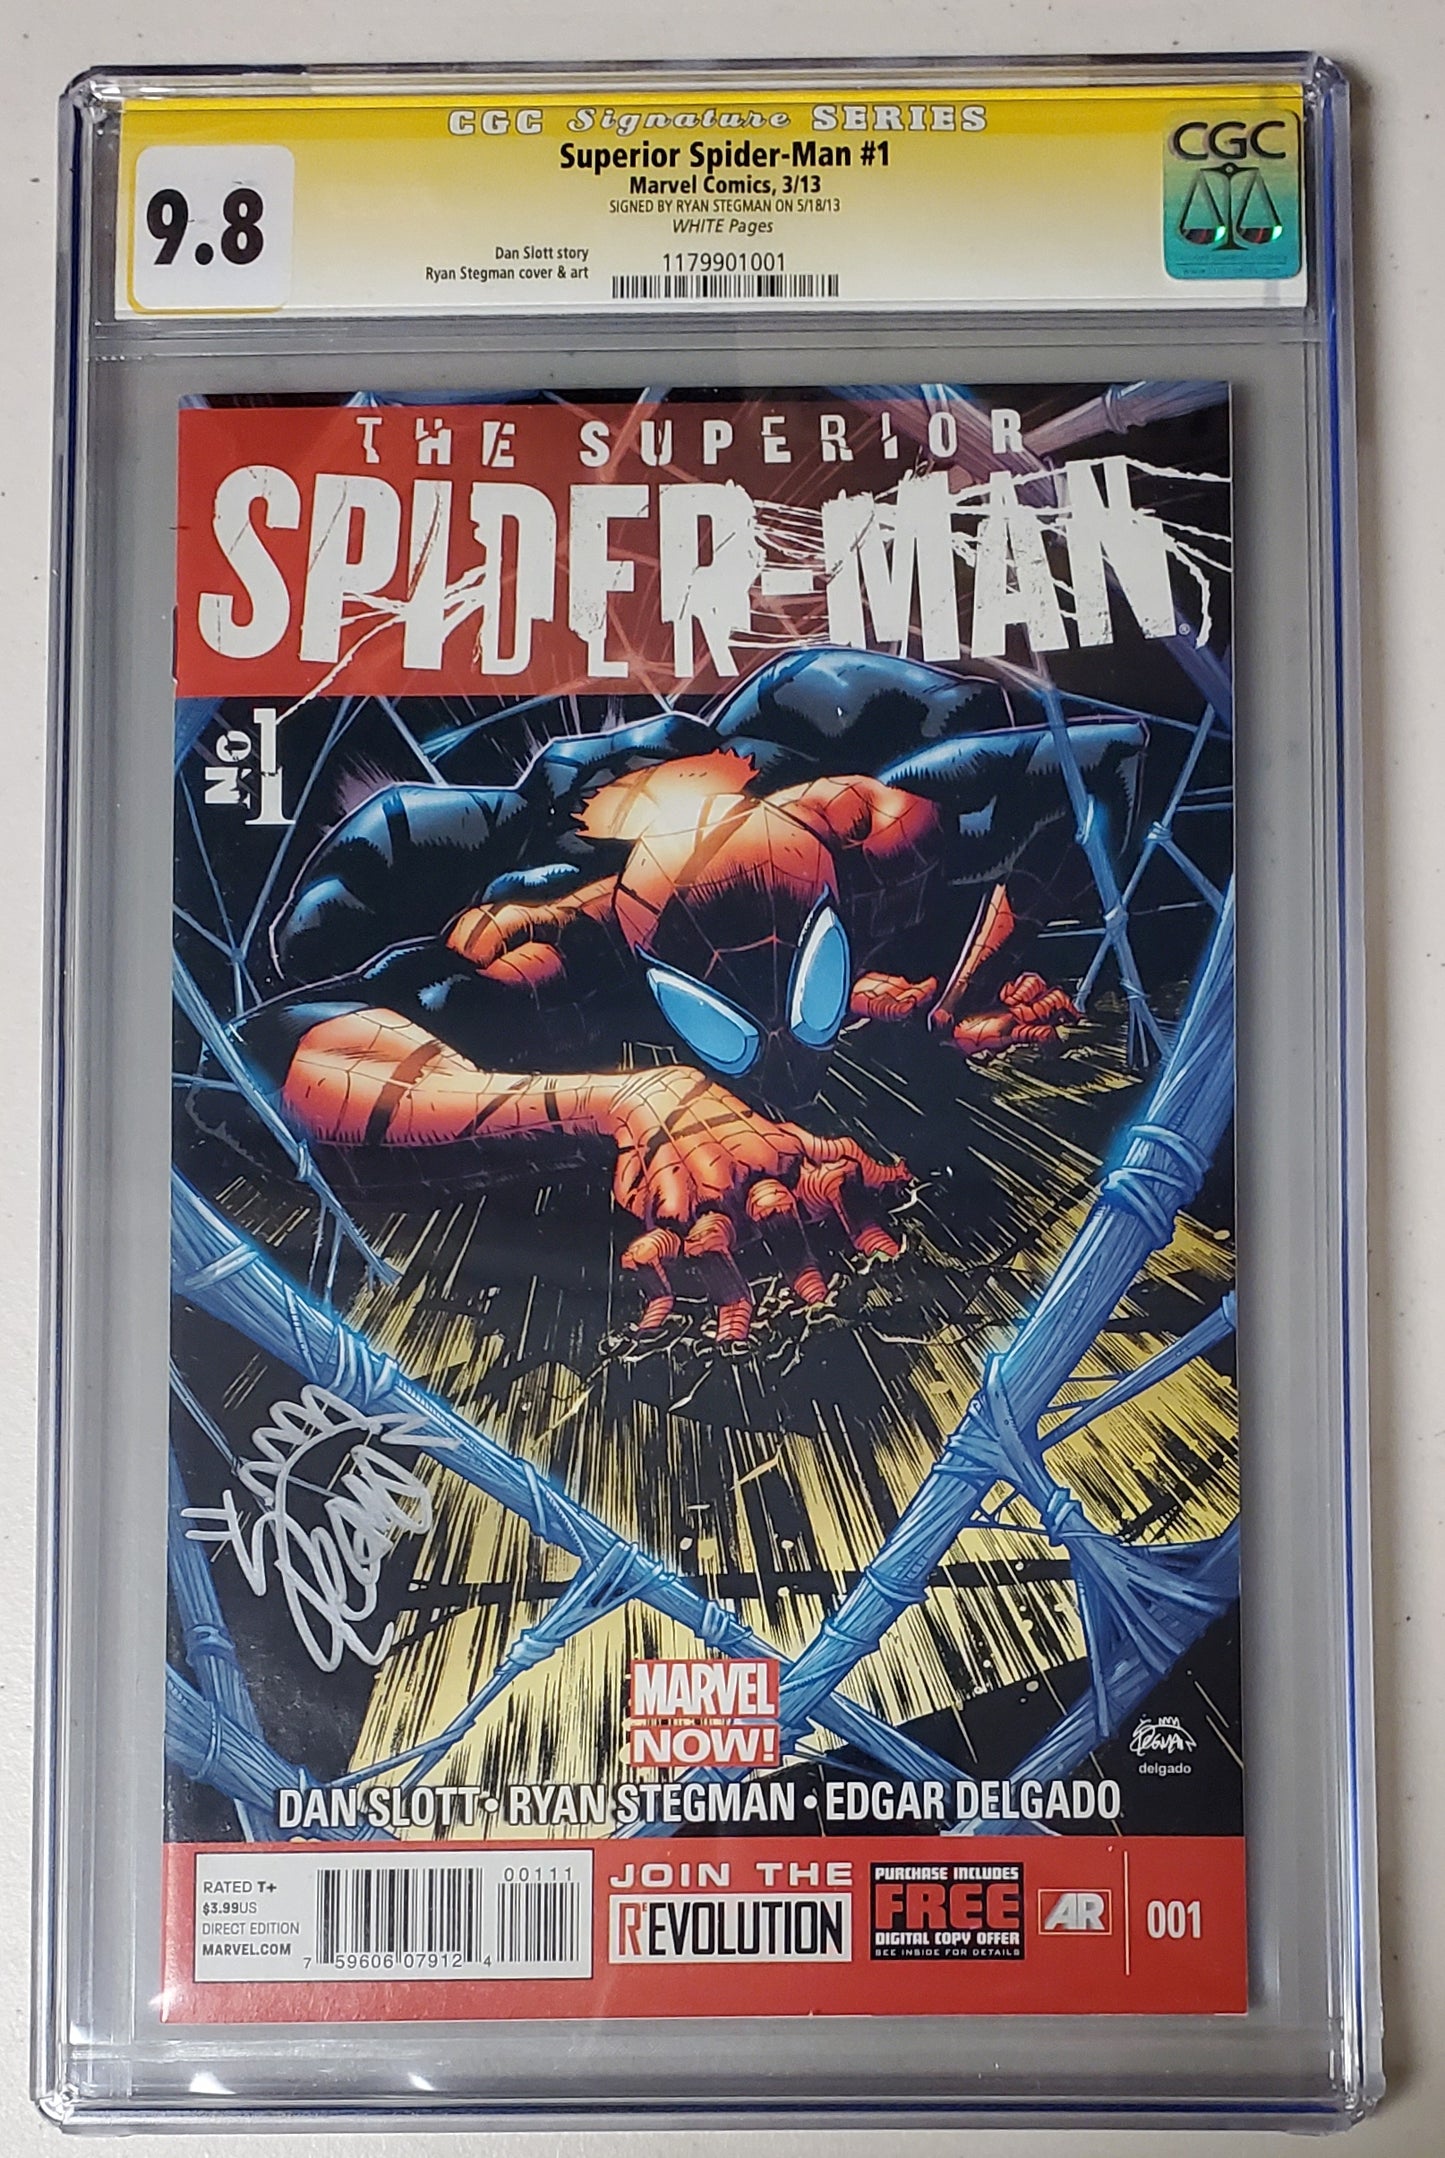 9.8 CGC SS Superior Spider-Man #1 signed by Ryan Stegman 2013